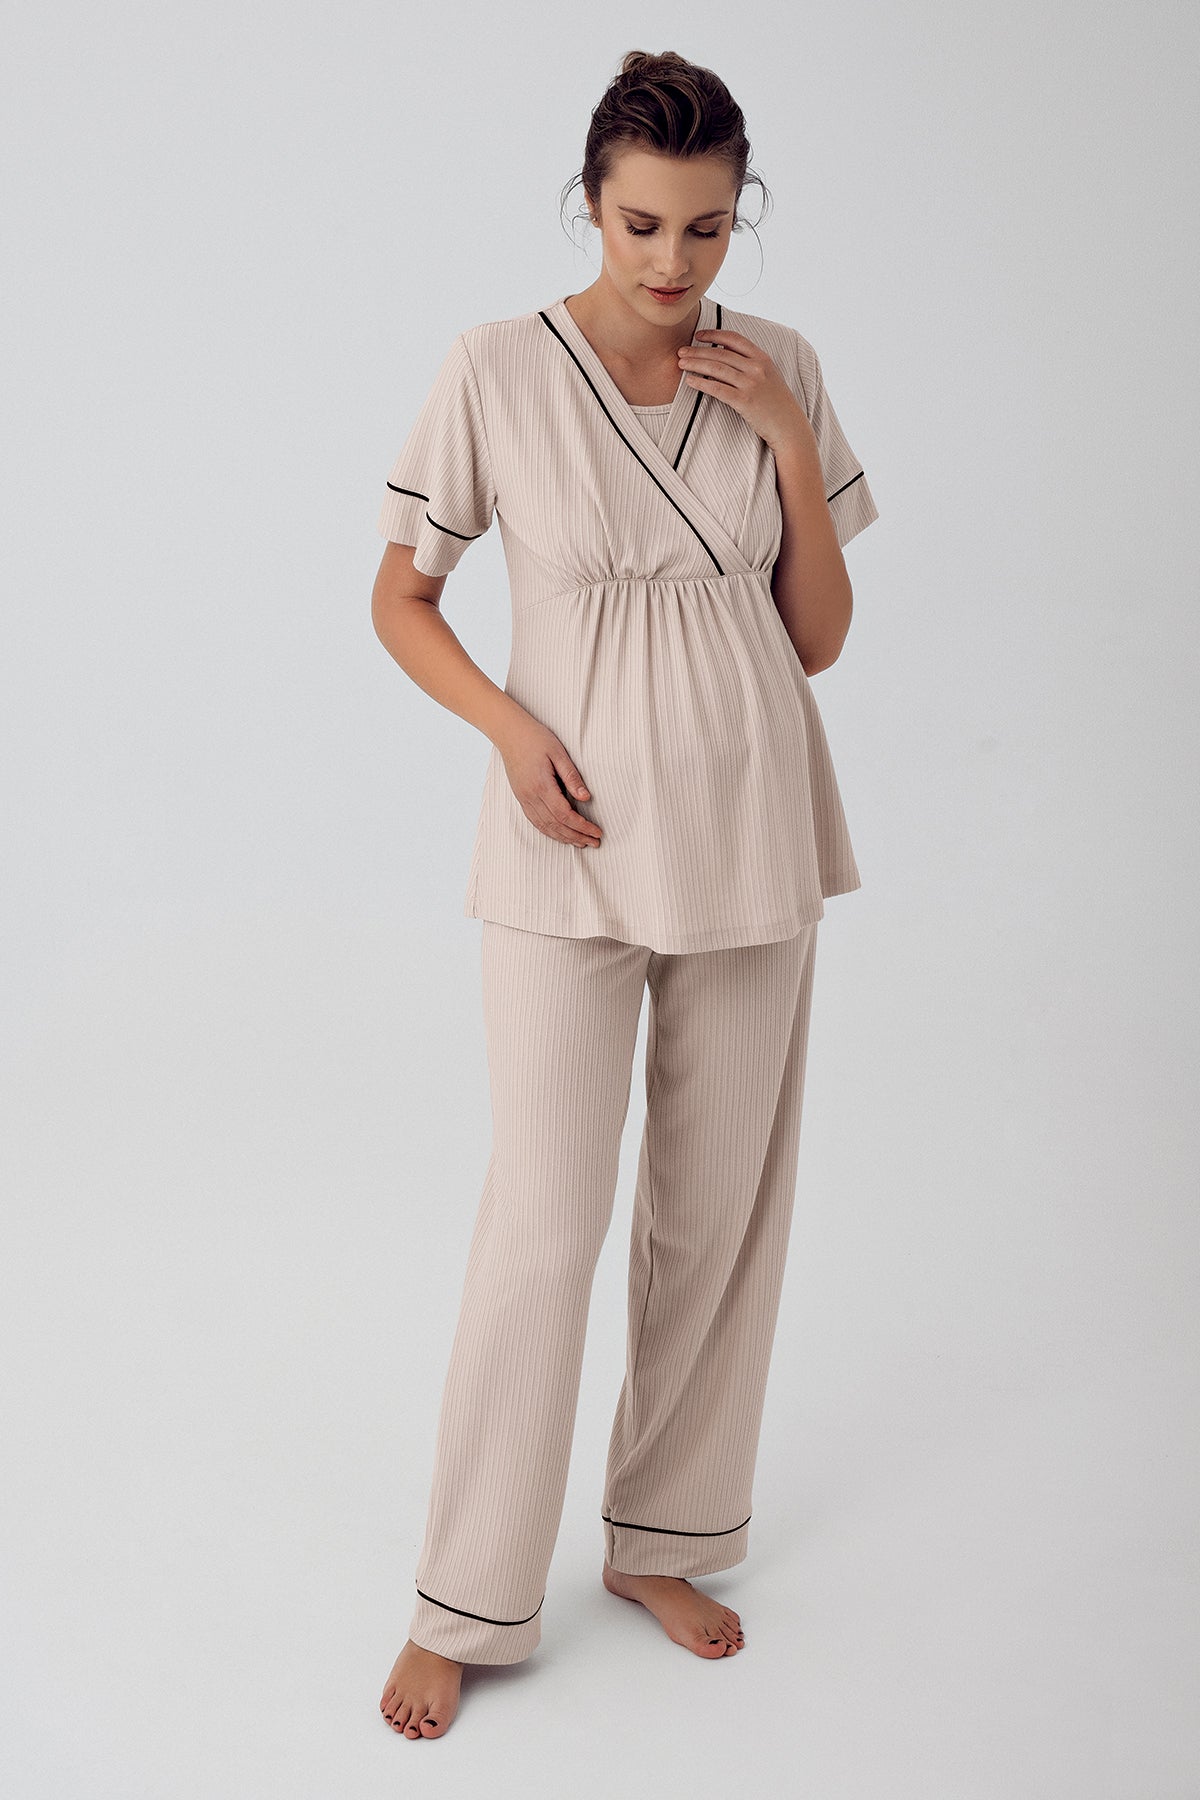 Shopymommy 16202 Double Breasted Maternity & Nursing Pajamas Beige